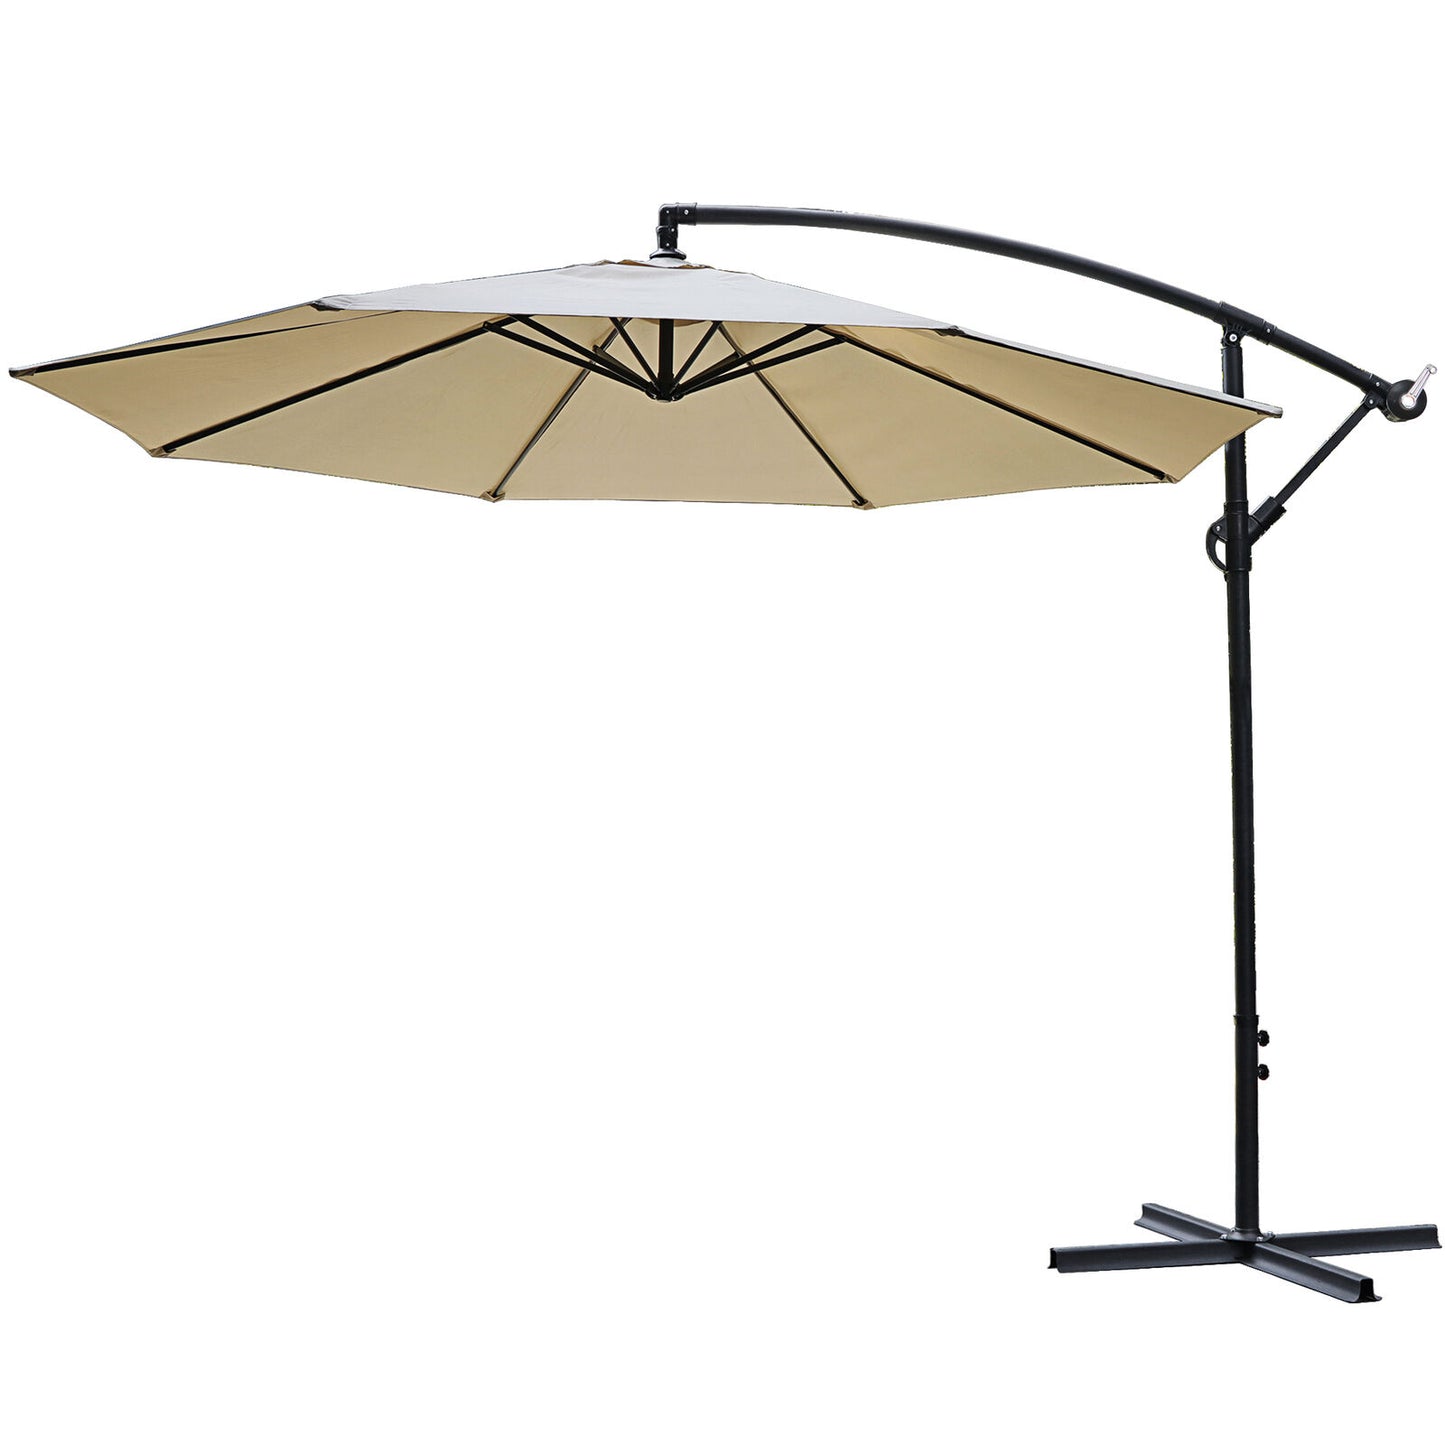 10ft Cantilever Patio Umbrella Hanging Market Umbrellas with Crank in Garden Tan